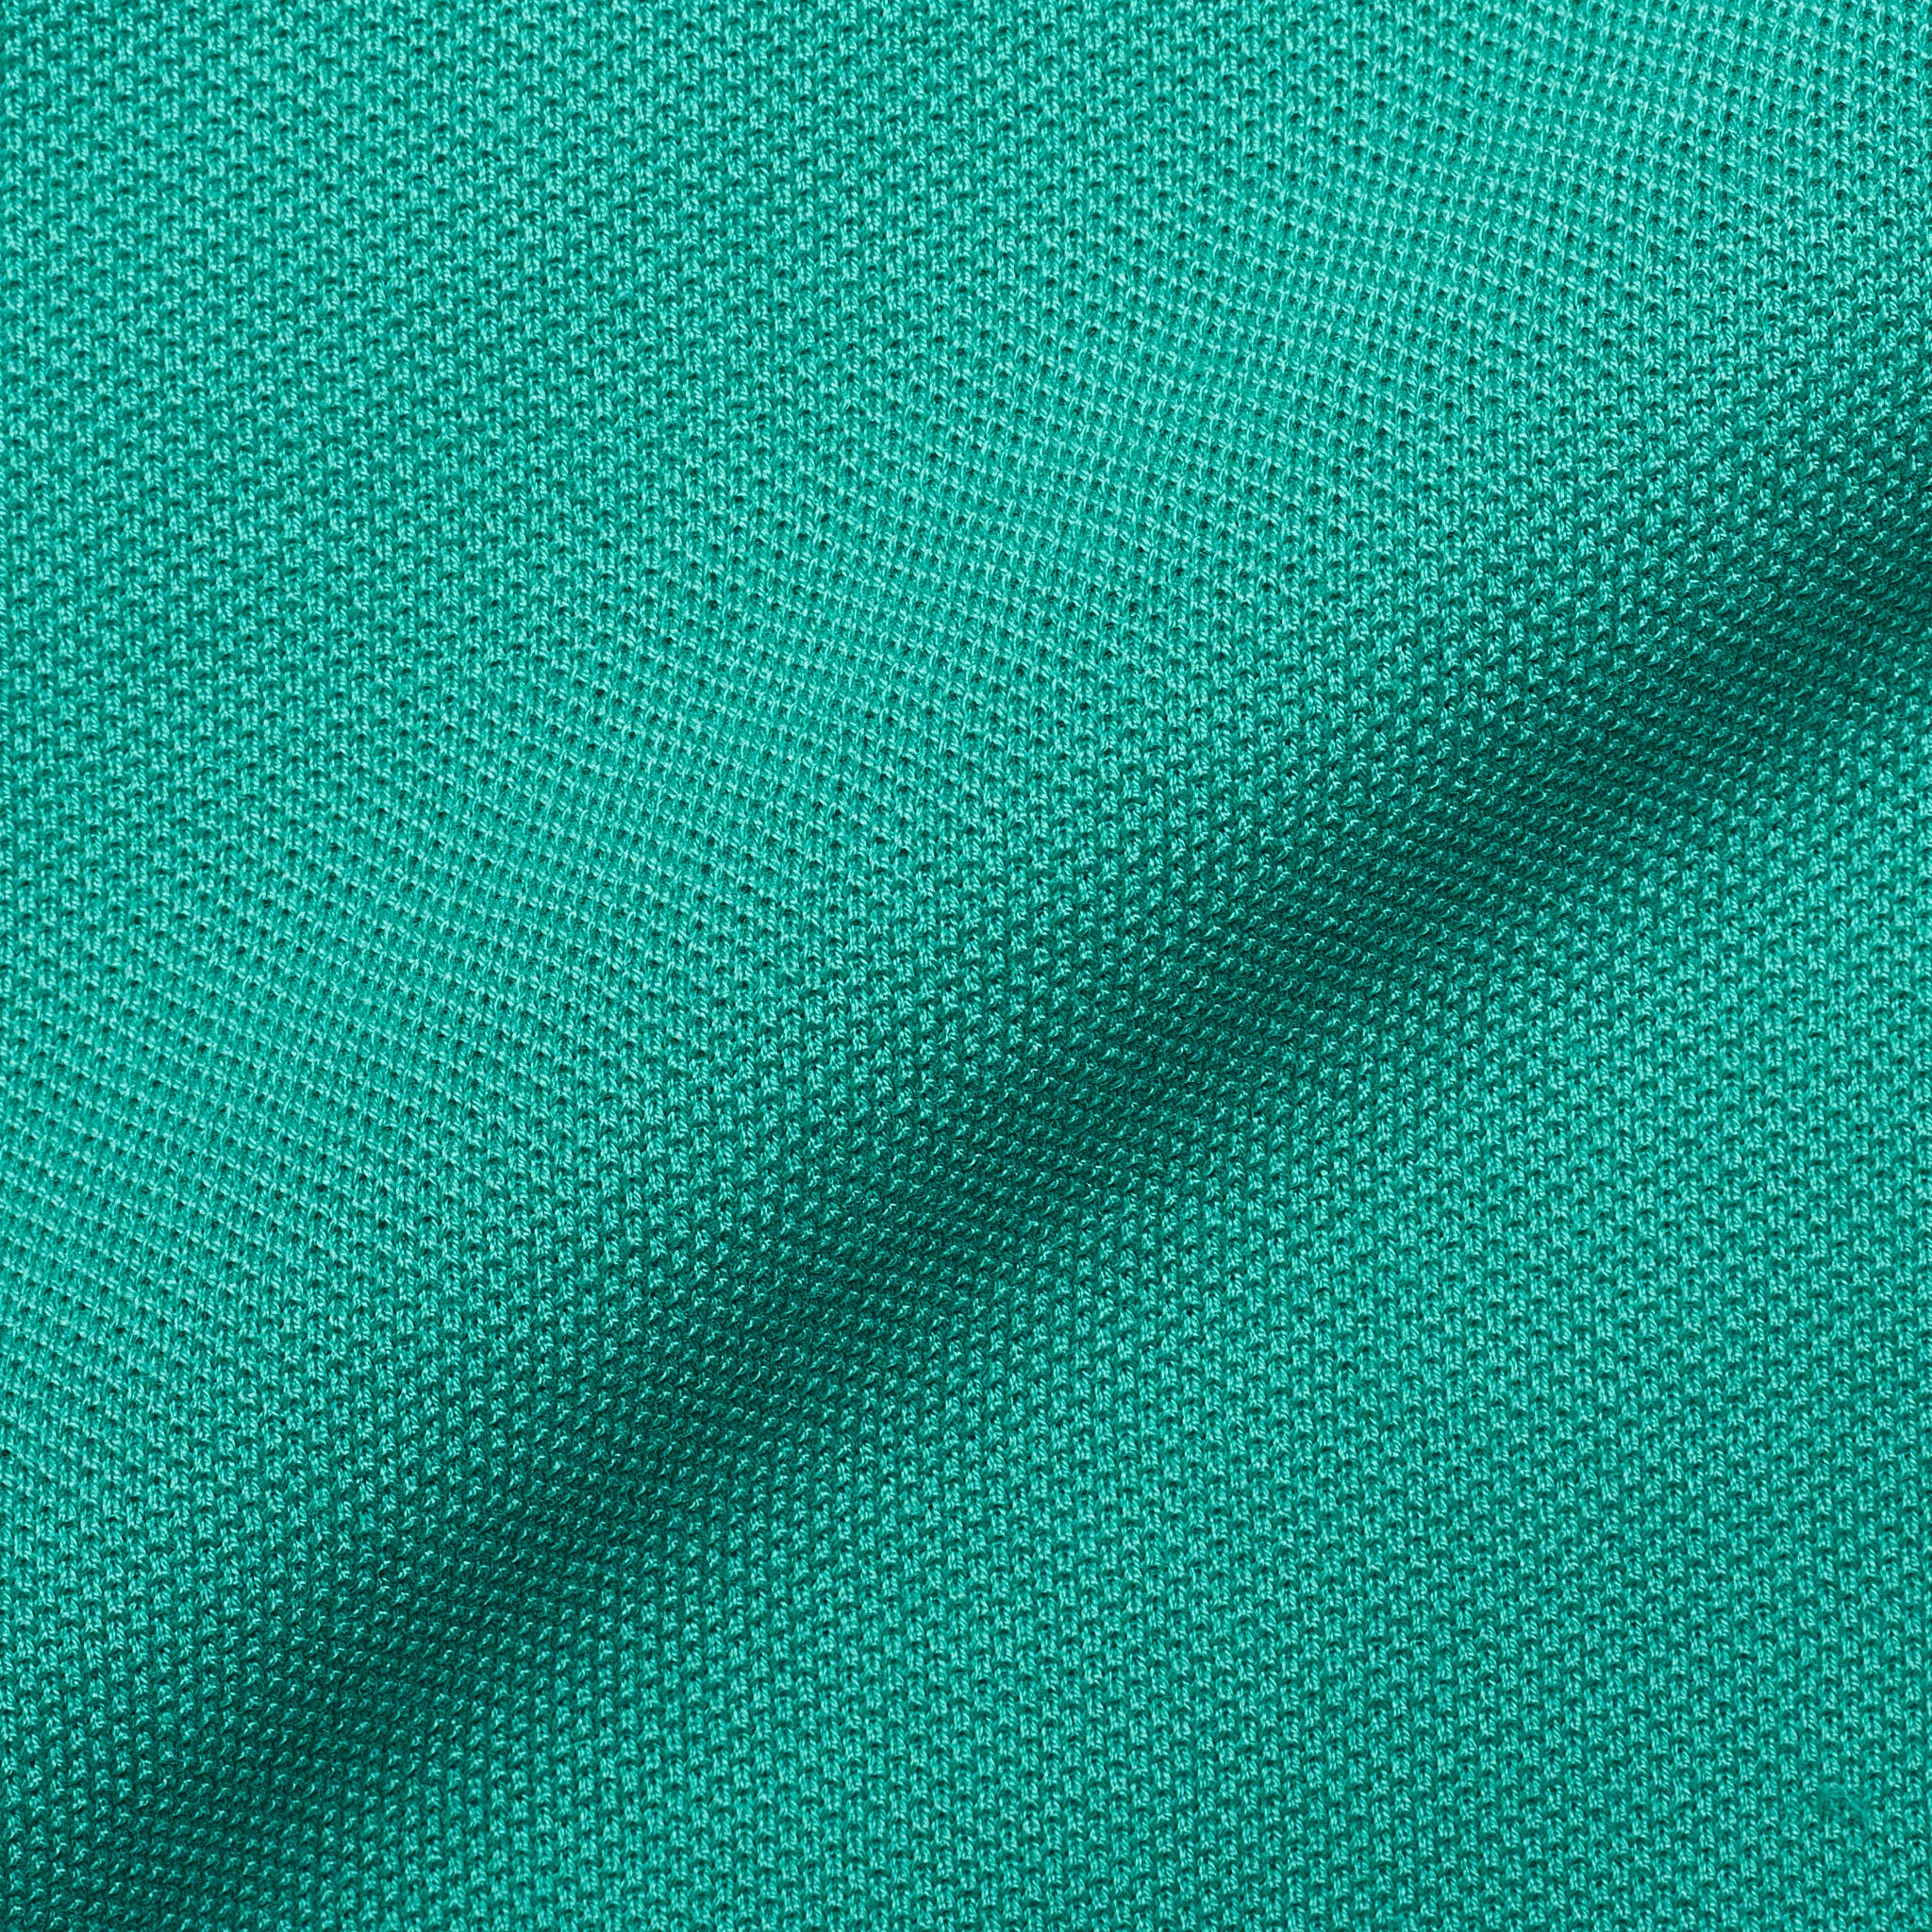 FEDELI Emerald Green Cotton Pique Long Sleeve Polo Shirt EU 48 NEW US S FEDELI